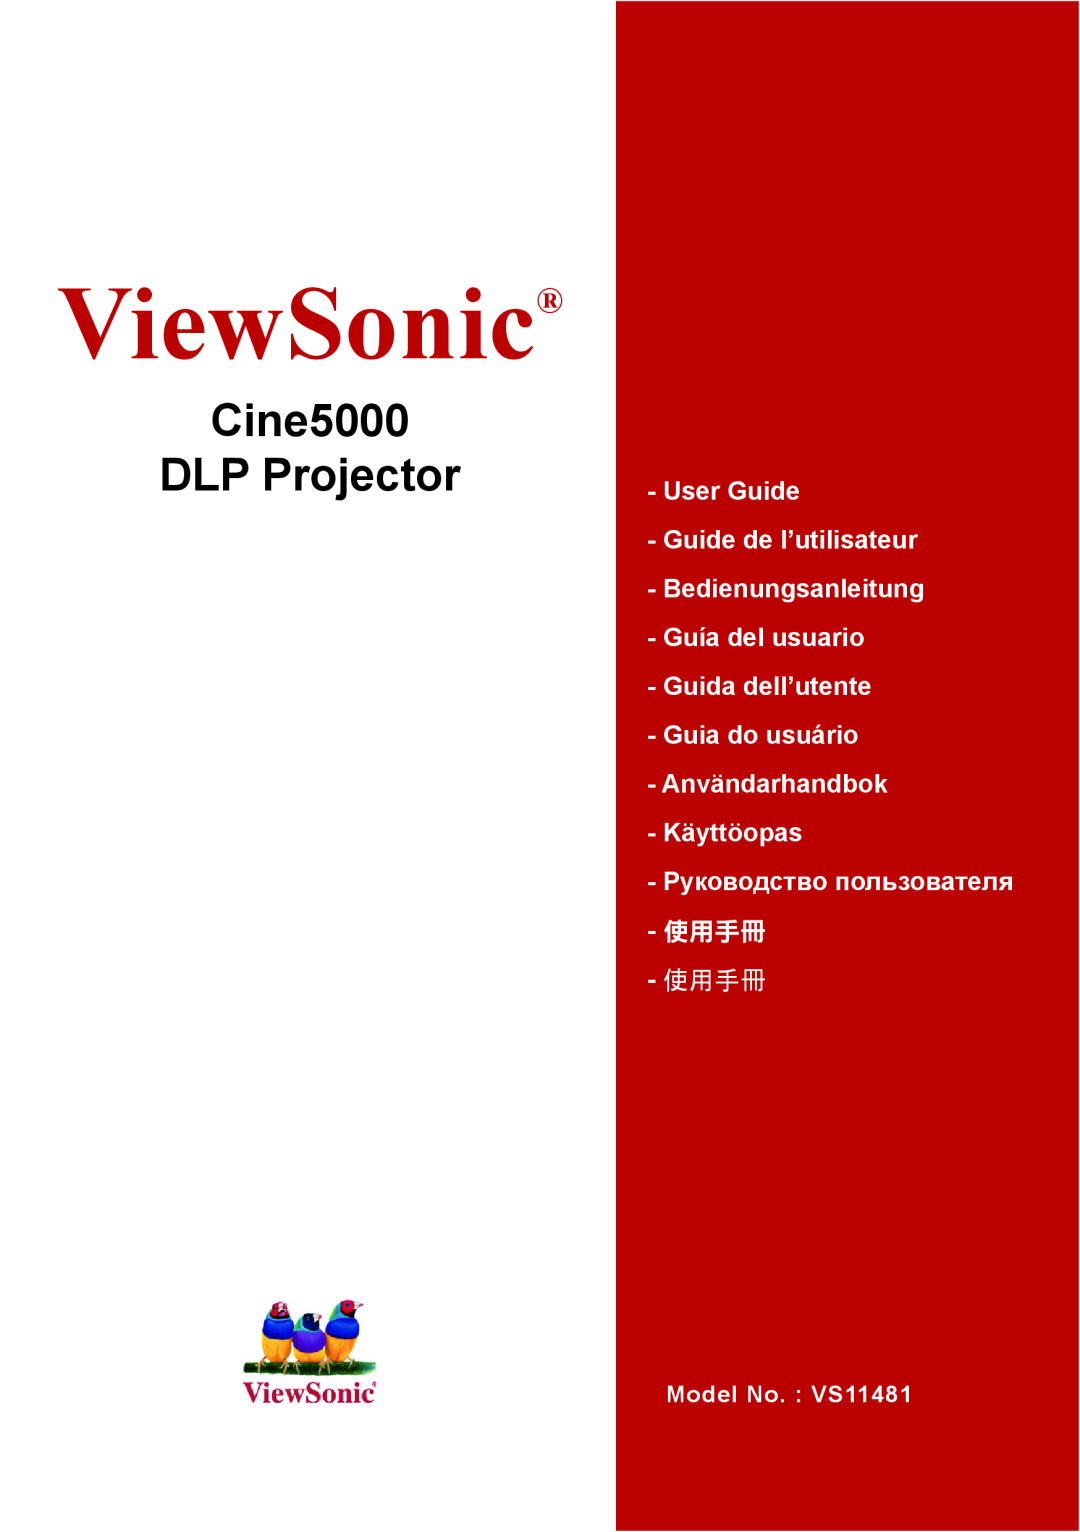 ViewSonic manual Model No. VS11481, ViewSonic, Cine5000 DLP Projector, User Guide Guide de l’utilisateur, 使用手冊 使用手冊 